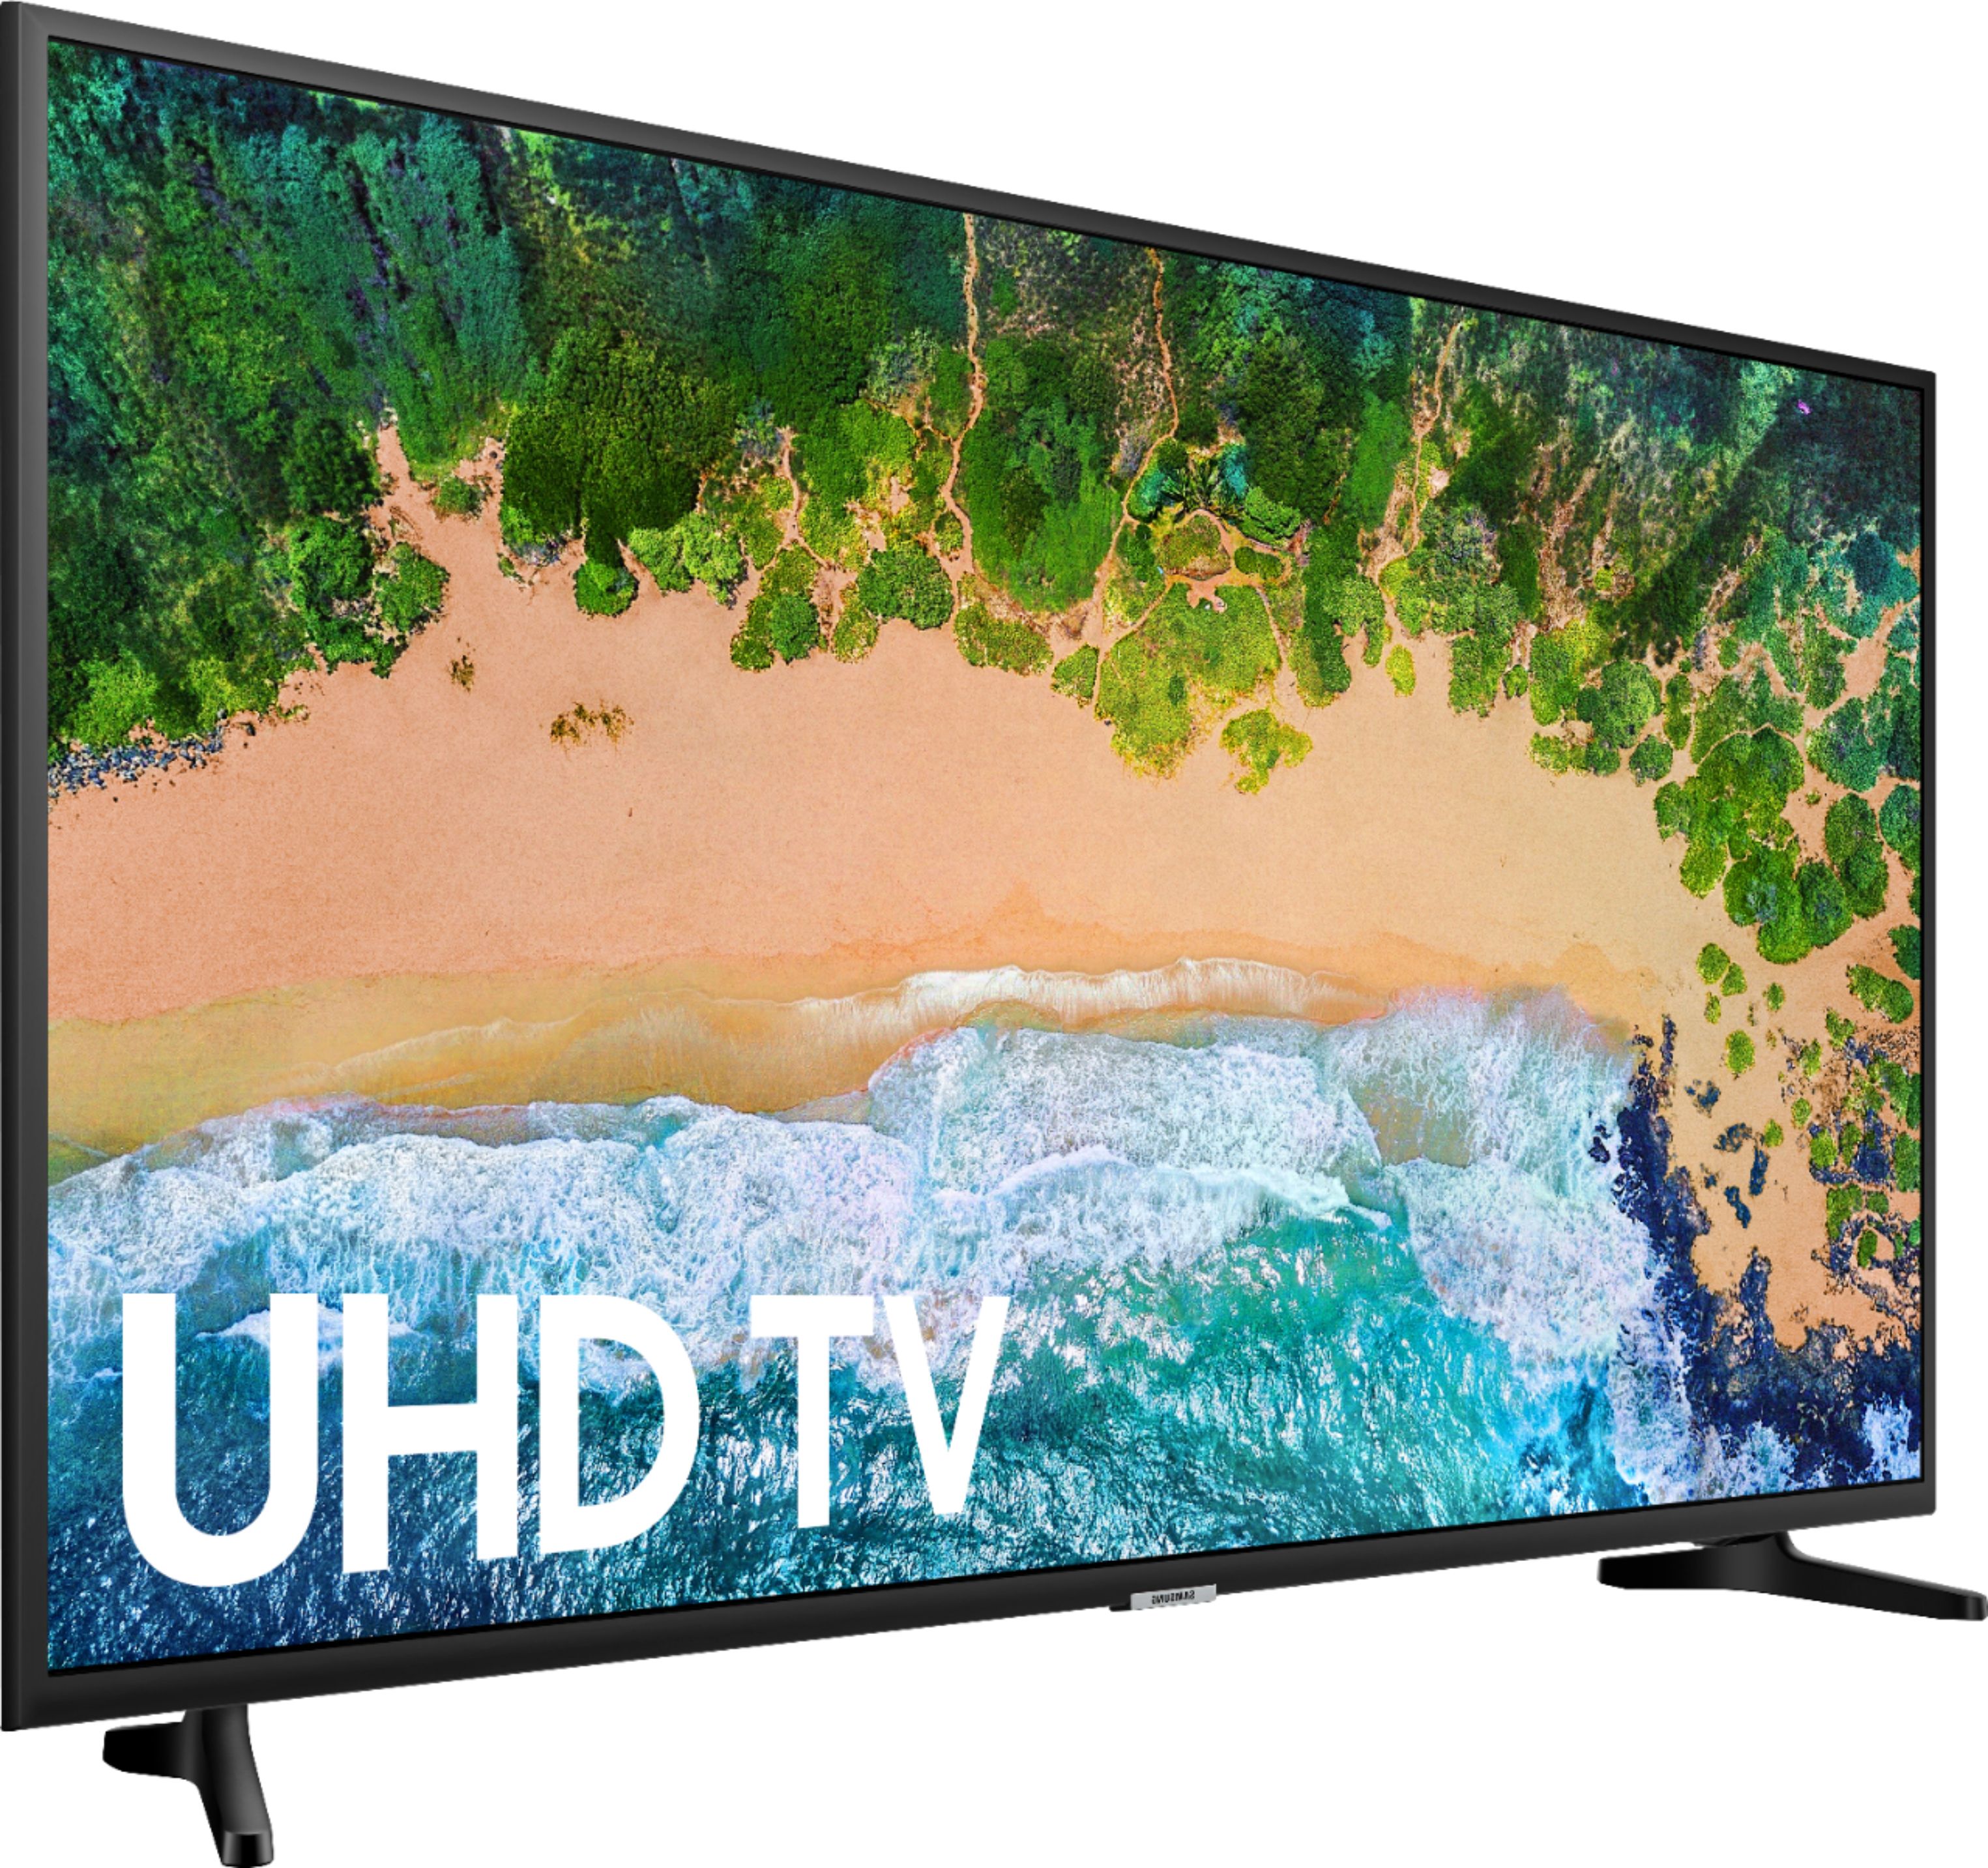 Best Buy: Samsung 58" Class LED MU6070 2160p 4K TV with HDR UN58MU6070/EXZA